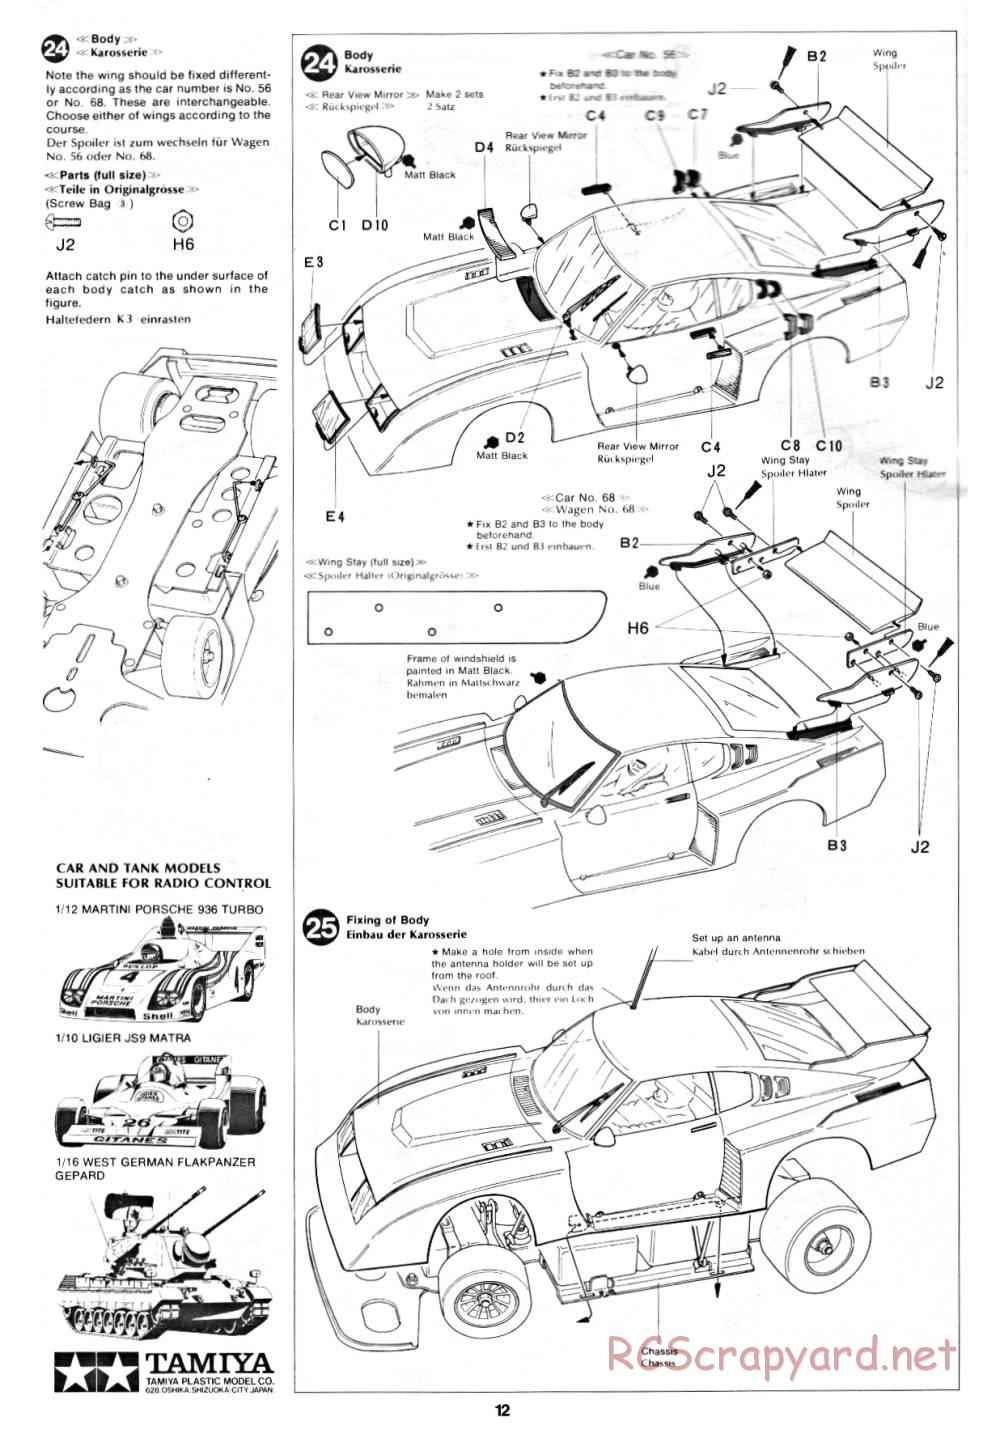 Tamiya - Toyota Celica LB Turbo Gr.5 (CS) - 58009 - Manual - Page 12